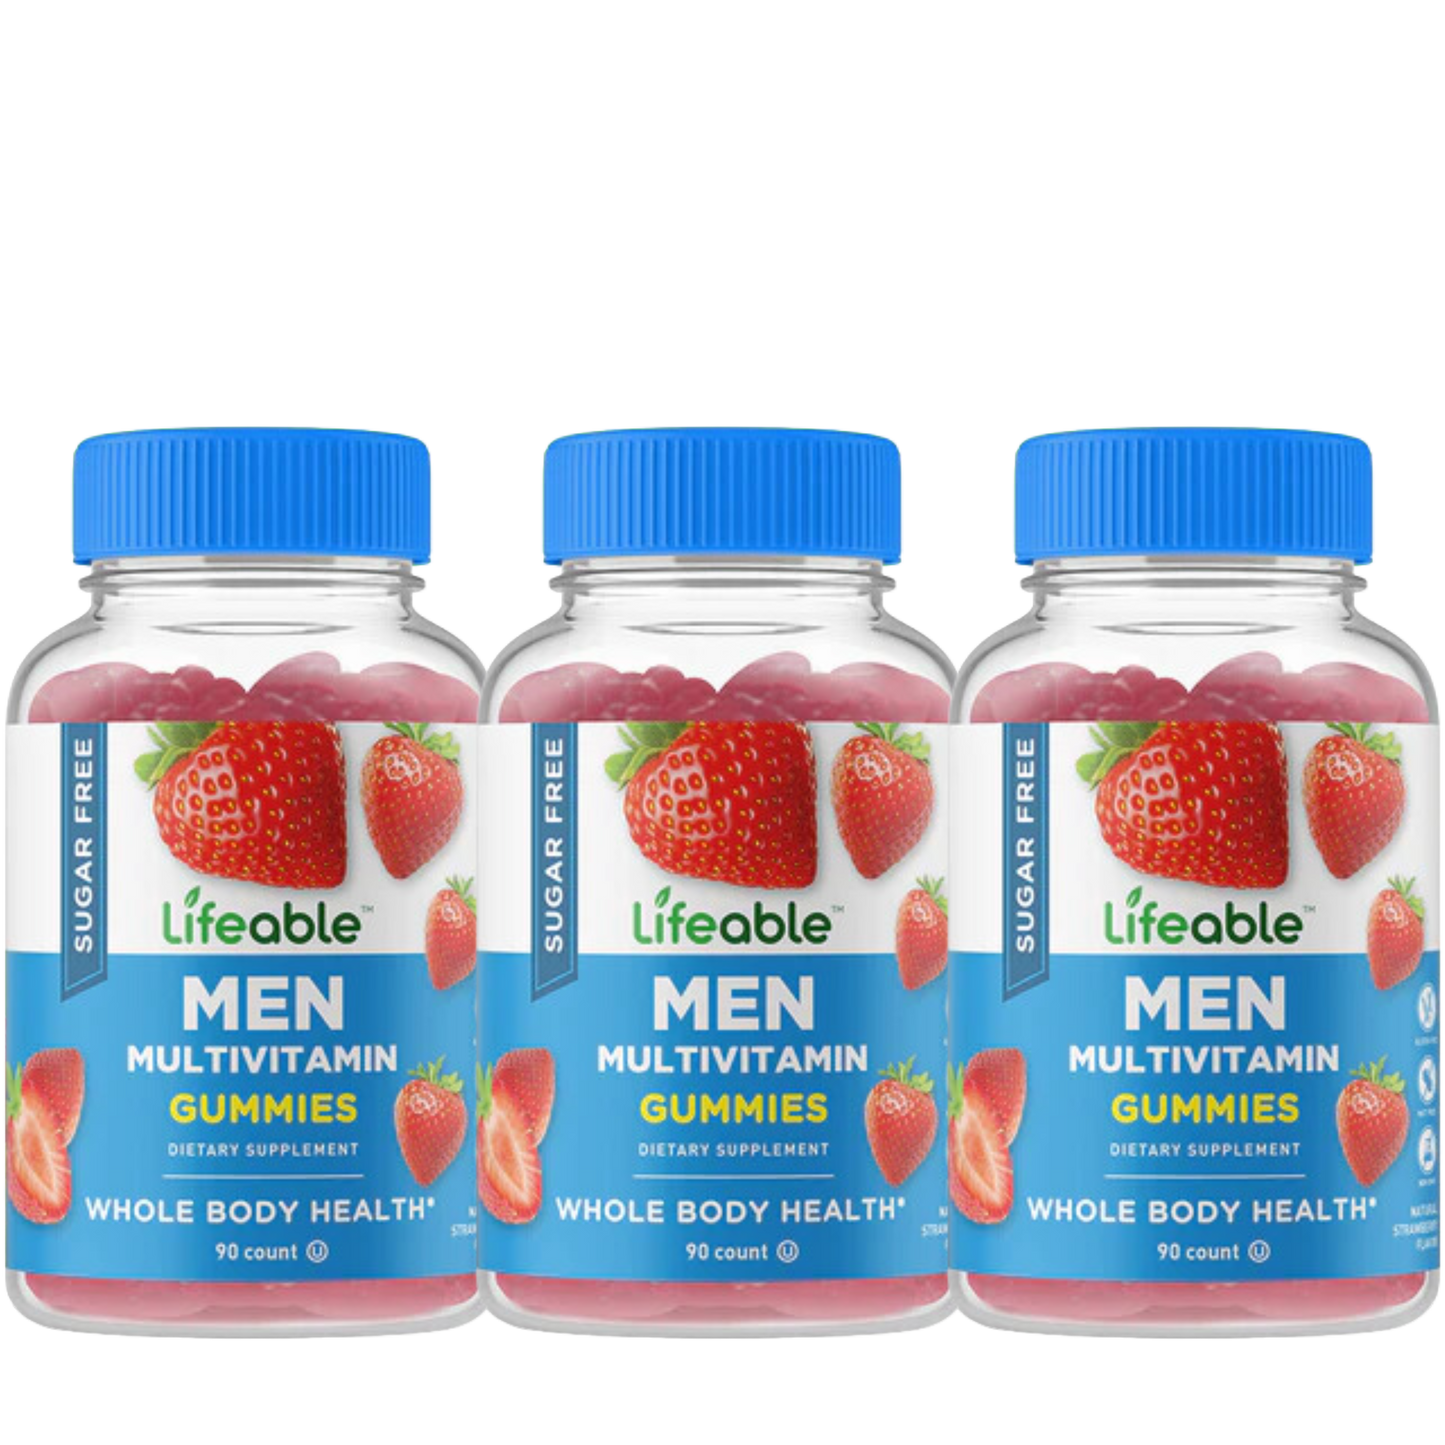 Sugar Free Multivitamin Gummies for Men